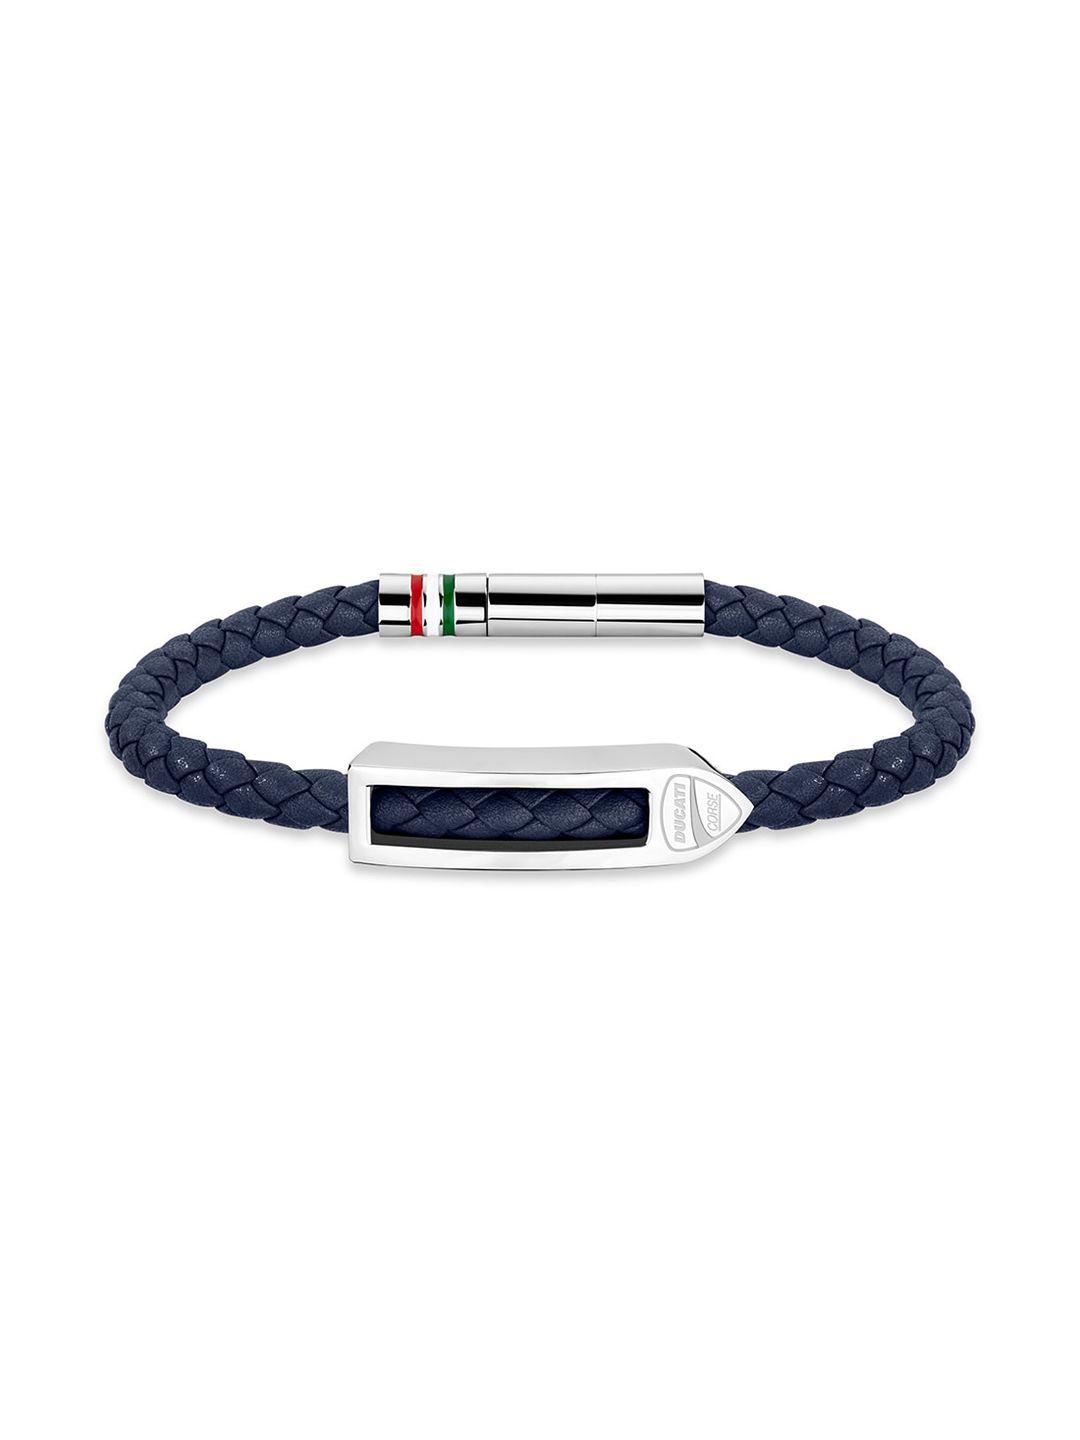 ducati corse men silver-toned & navy blue wraparound bracelet